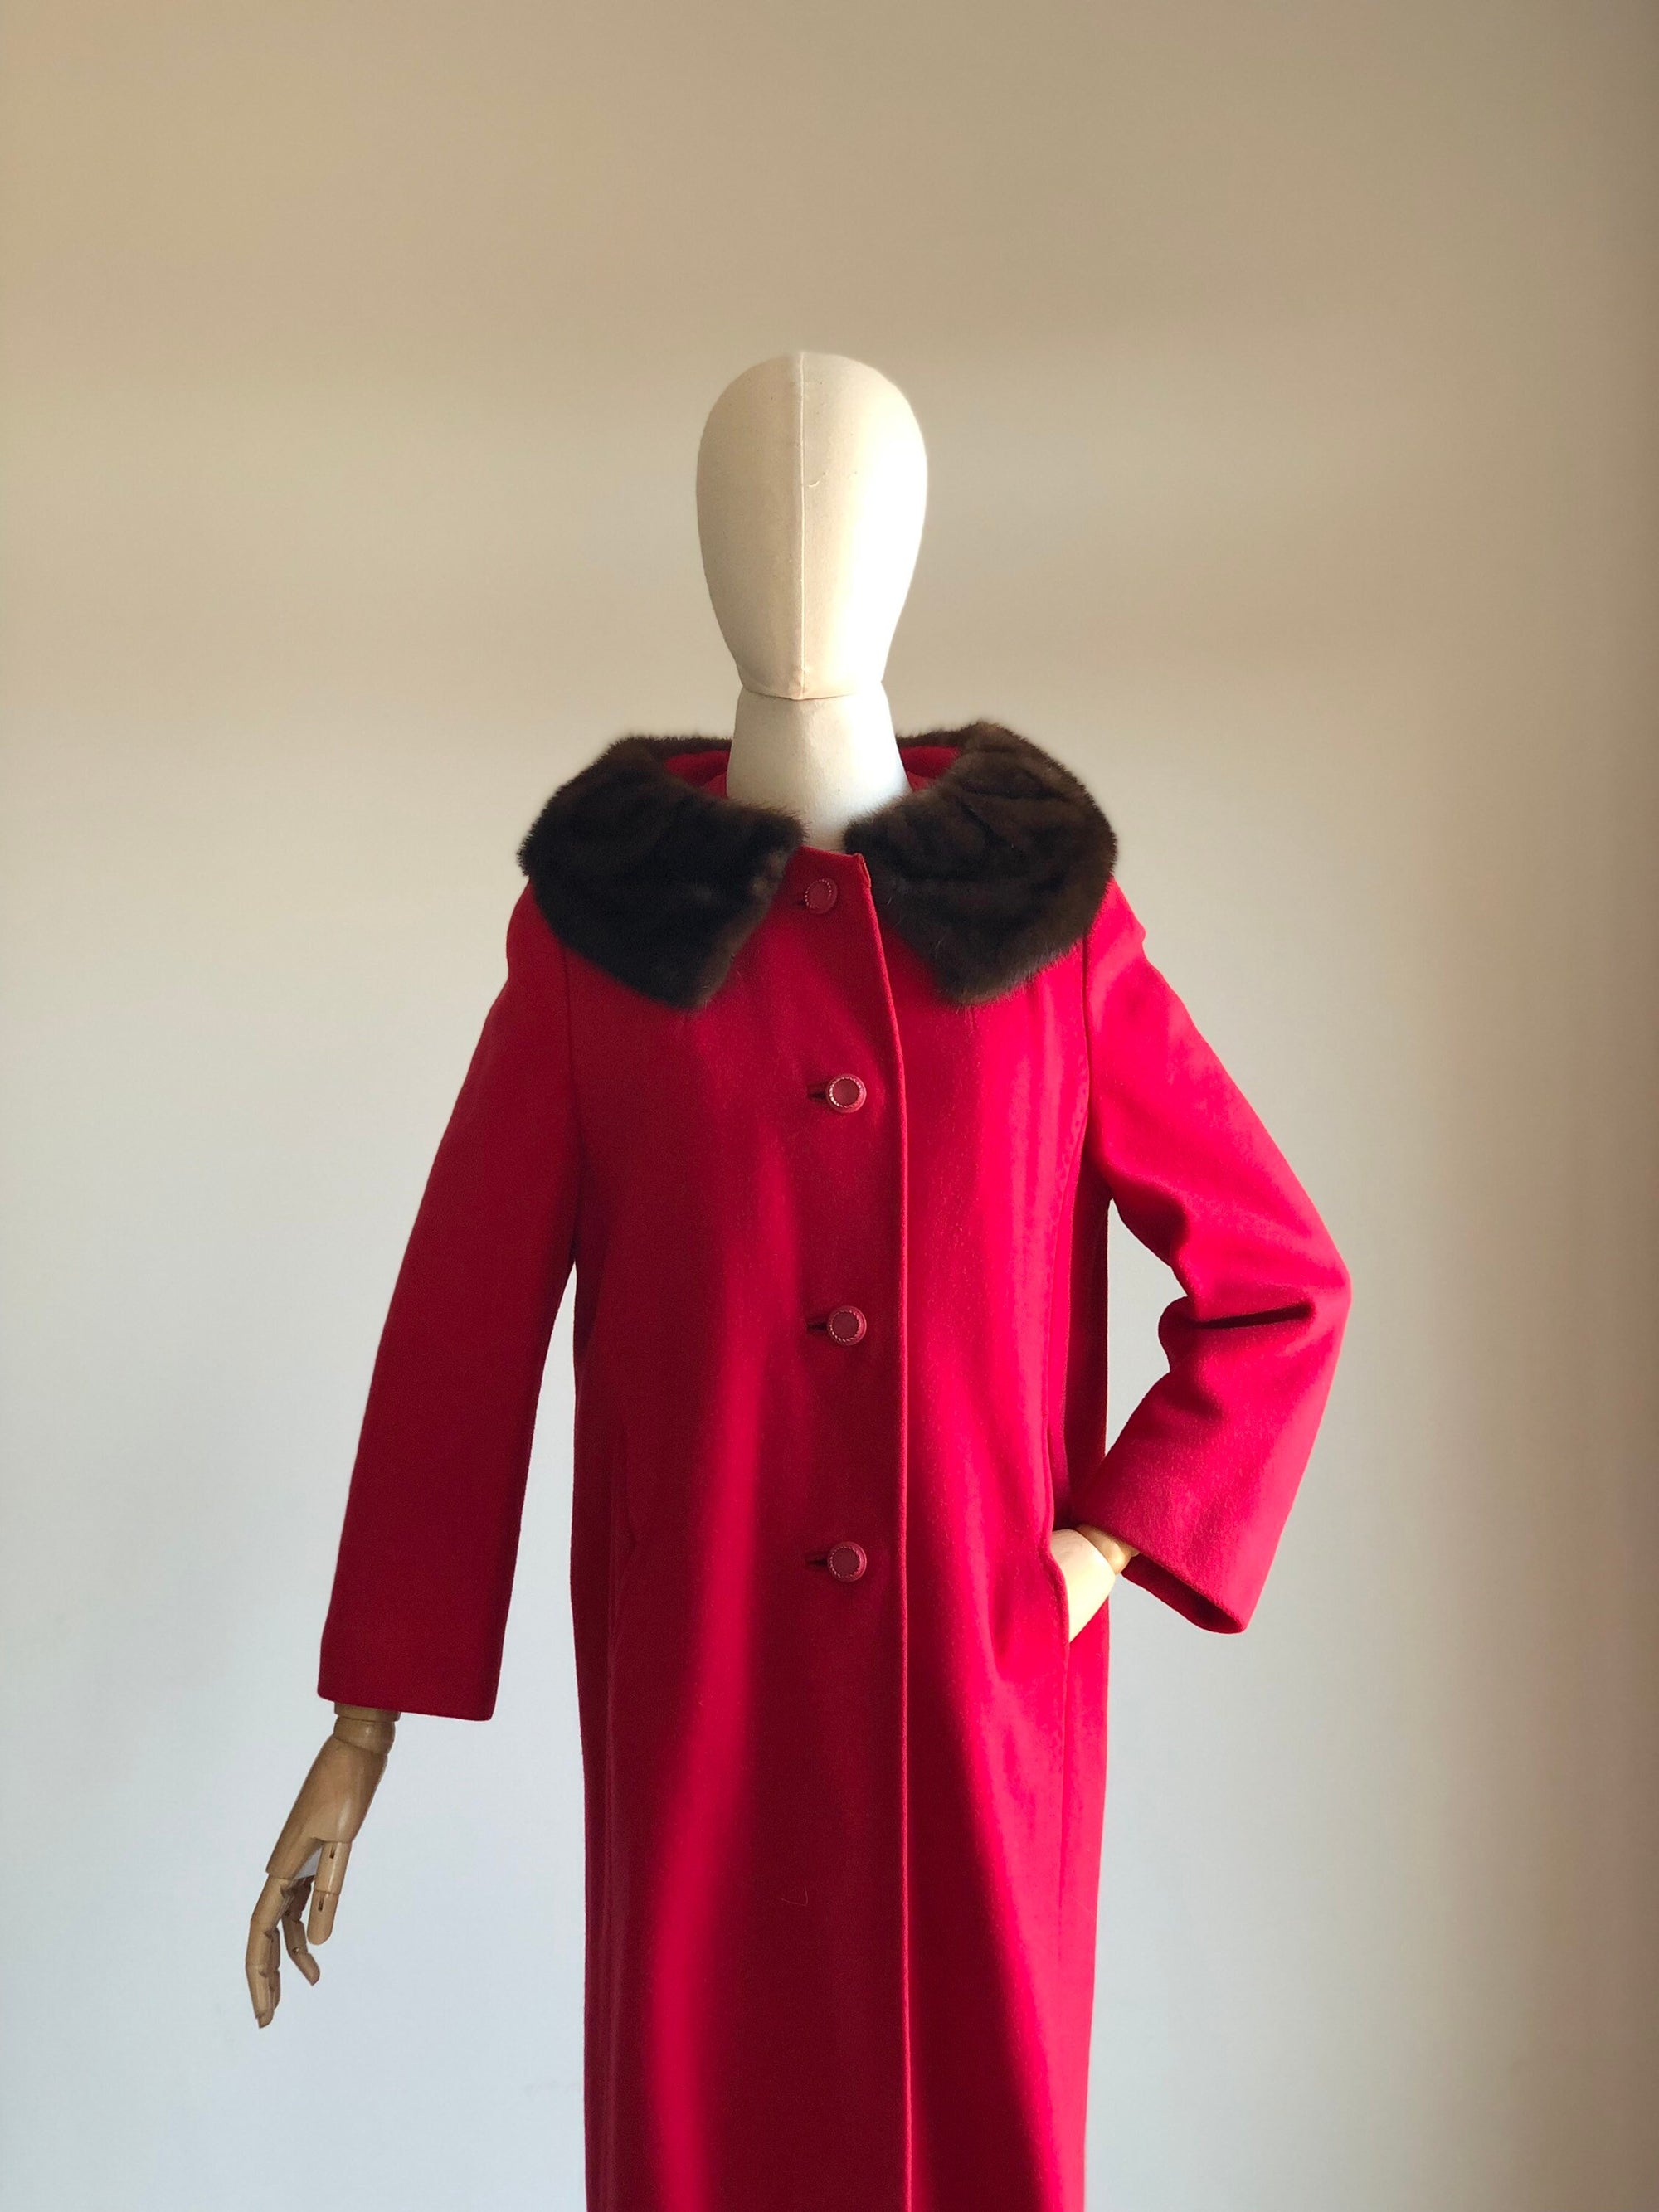 1950s Red Coat 100% Mongolian Cashmere Coat S/M/L